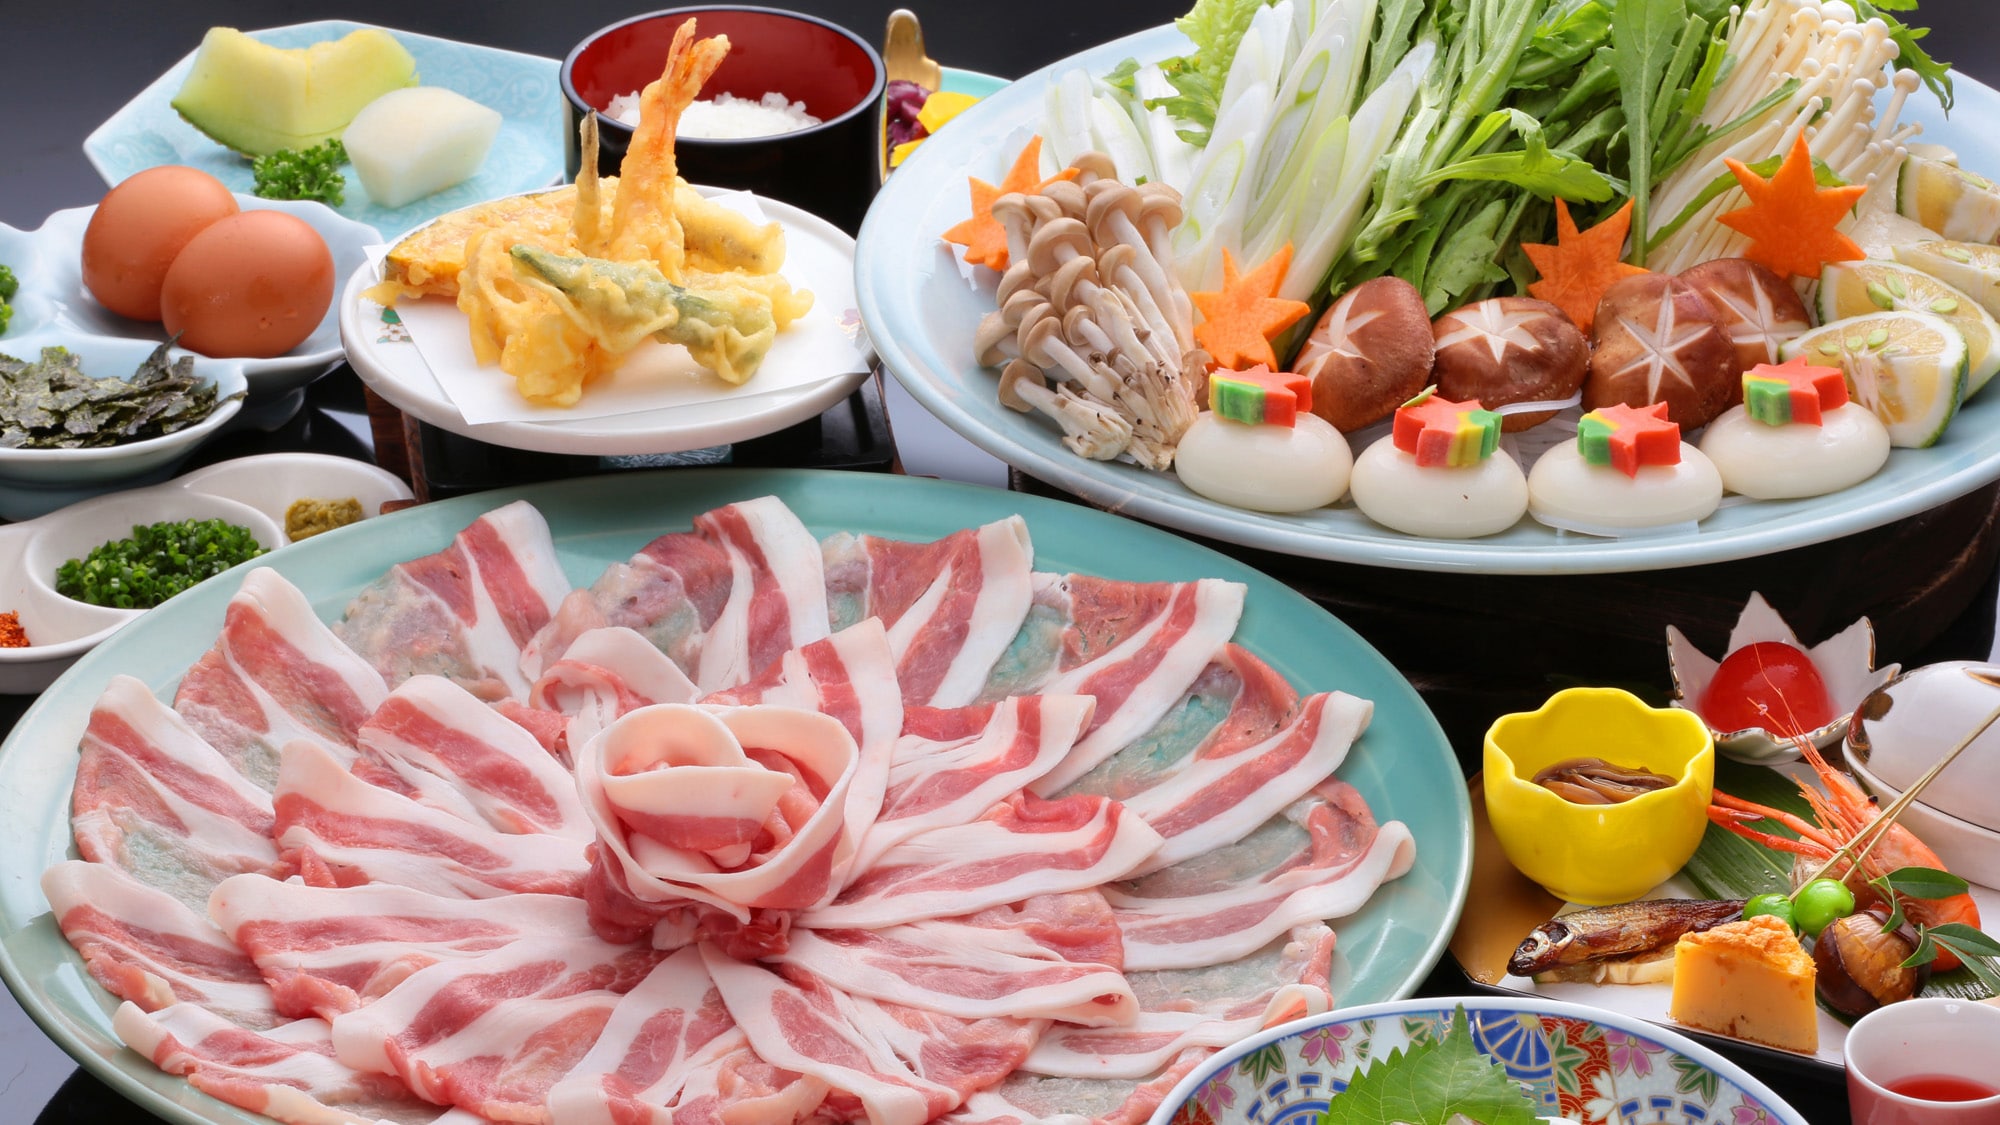 Local Ukiha brand pork "Mino Ubuta" shabu-shabu course / example